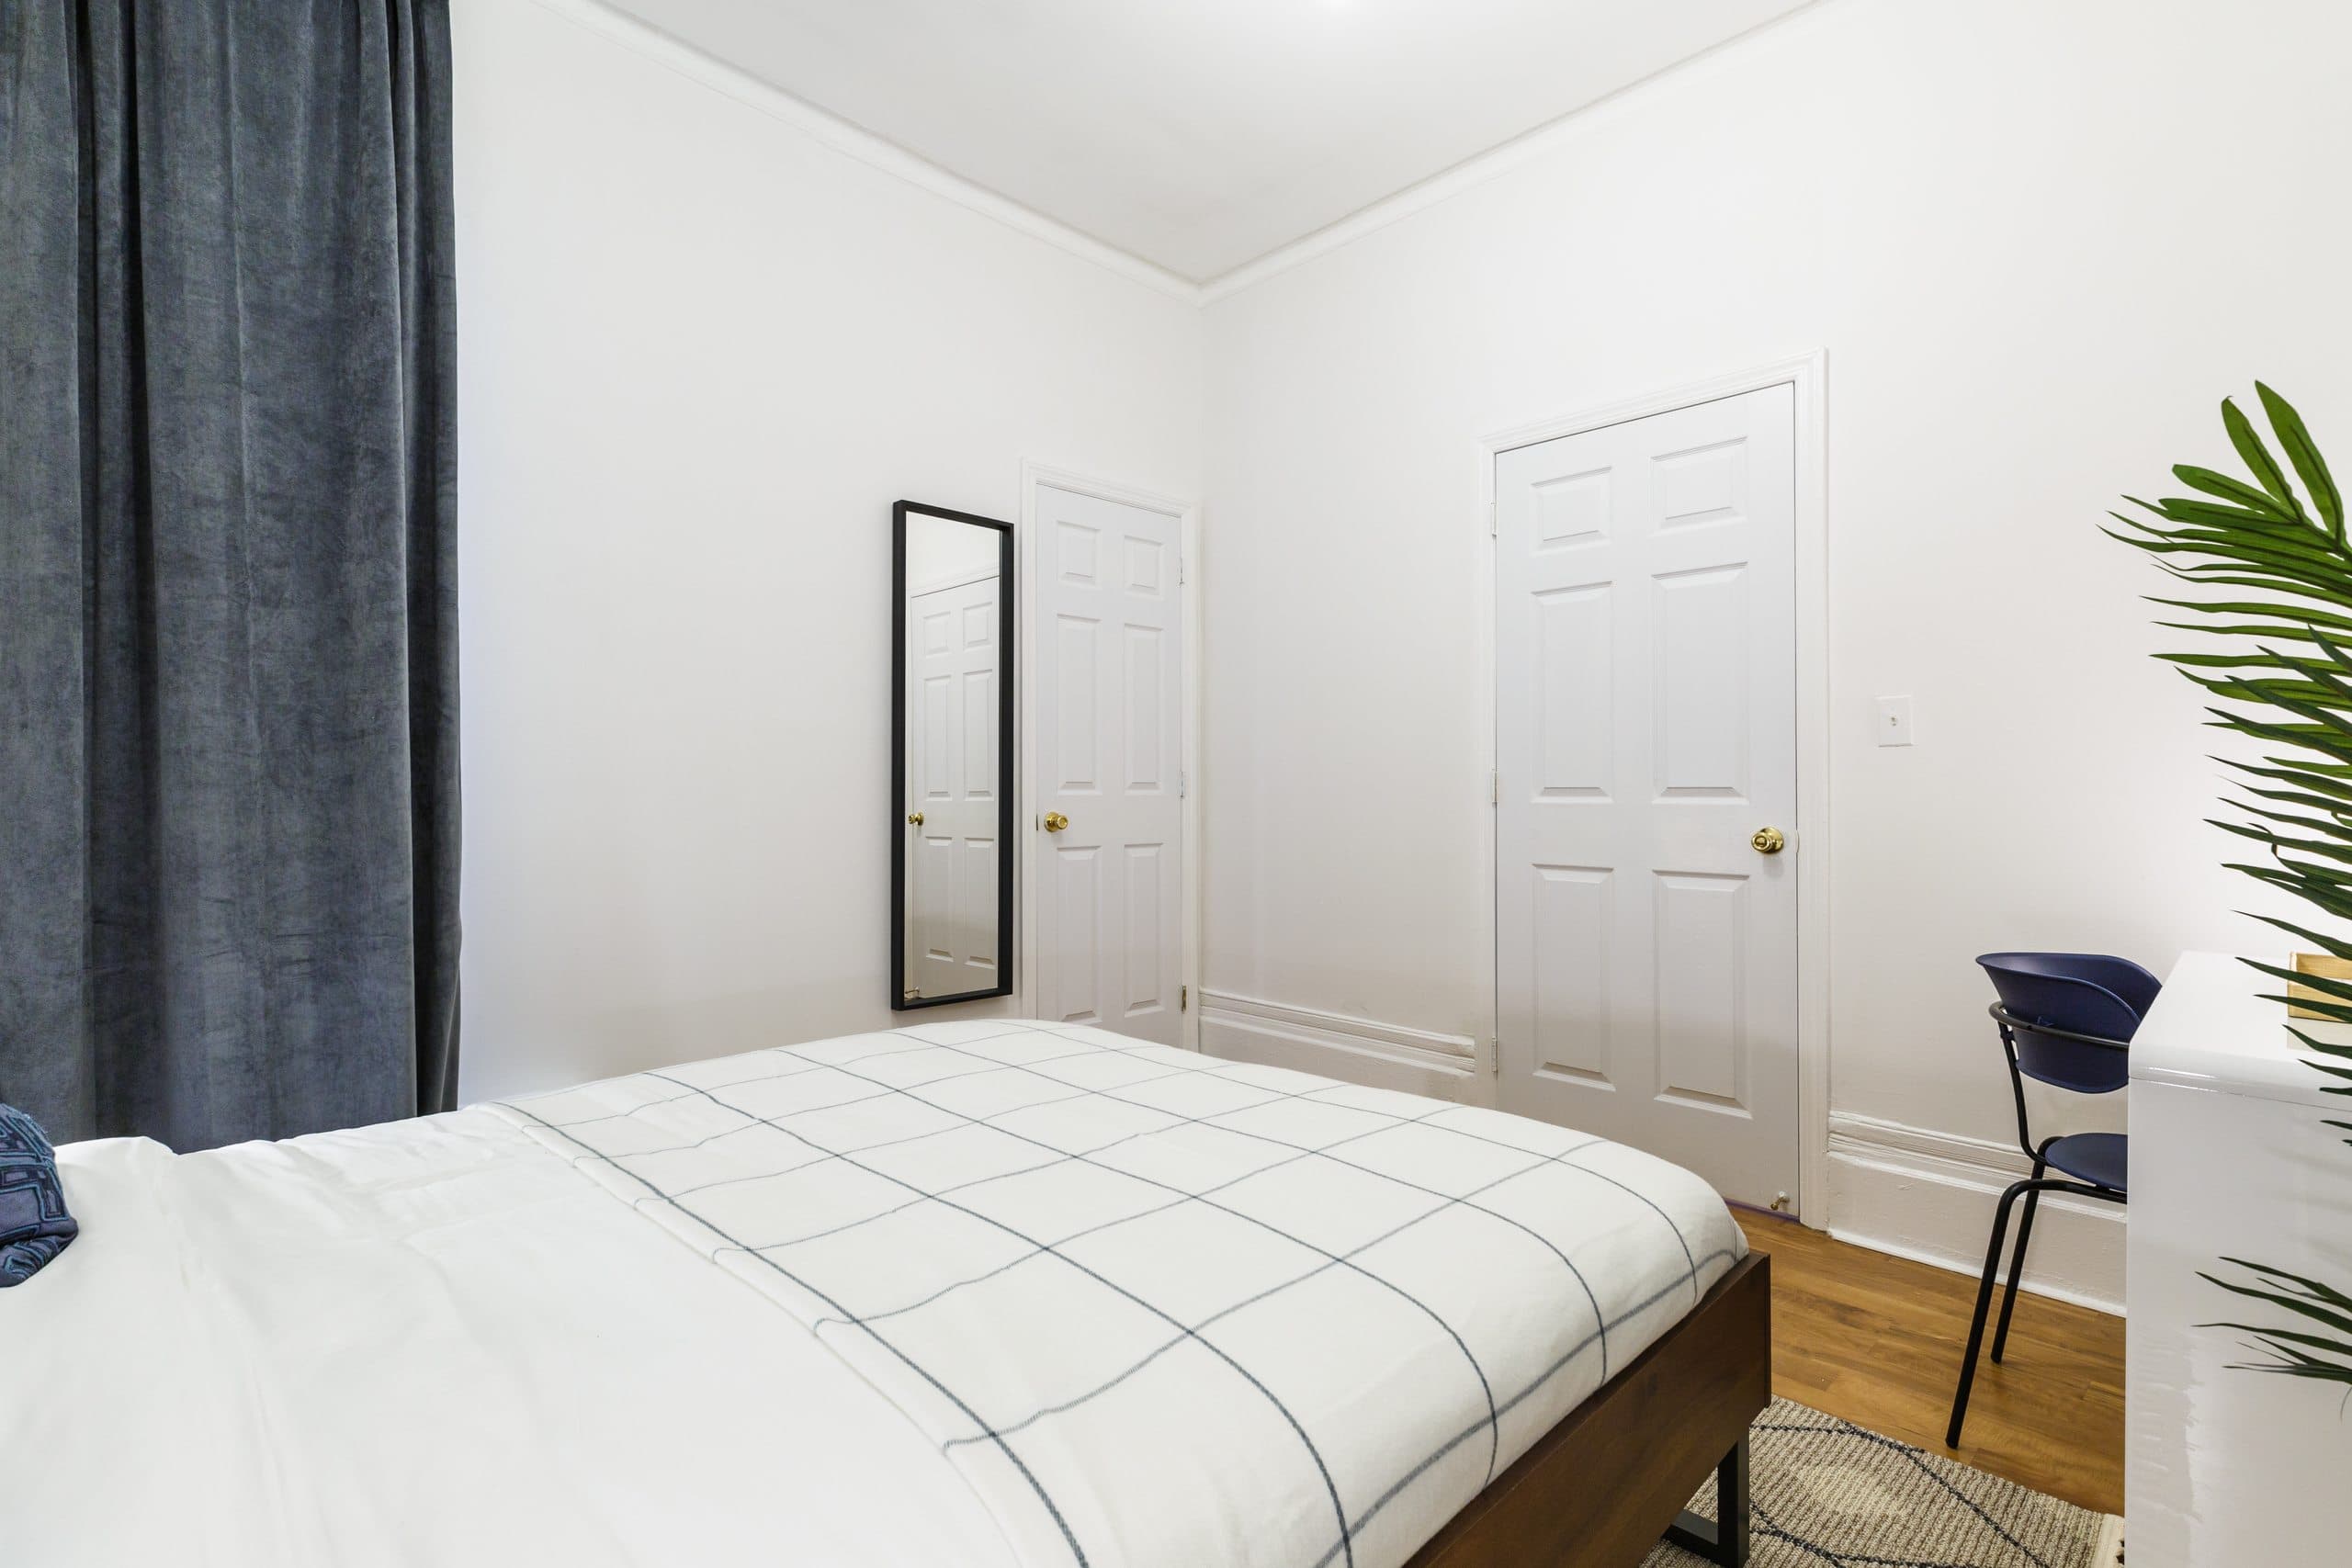 Photo 10 of #299: Full Bedroom B at June Homes